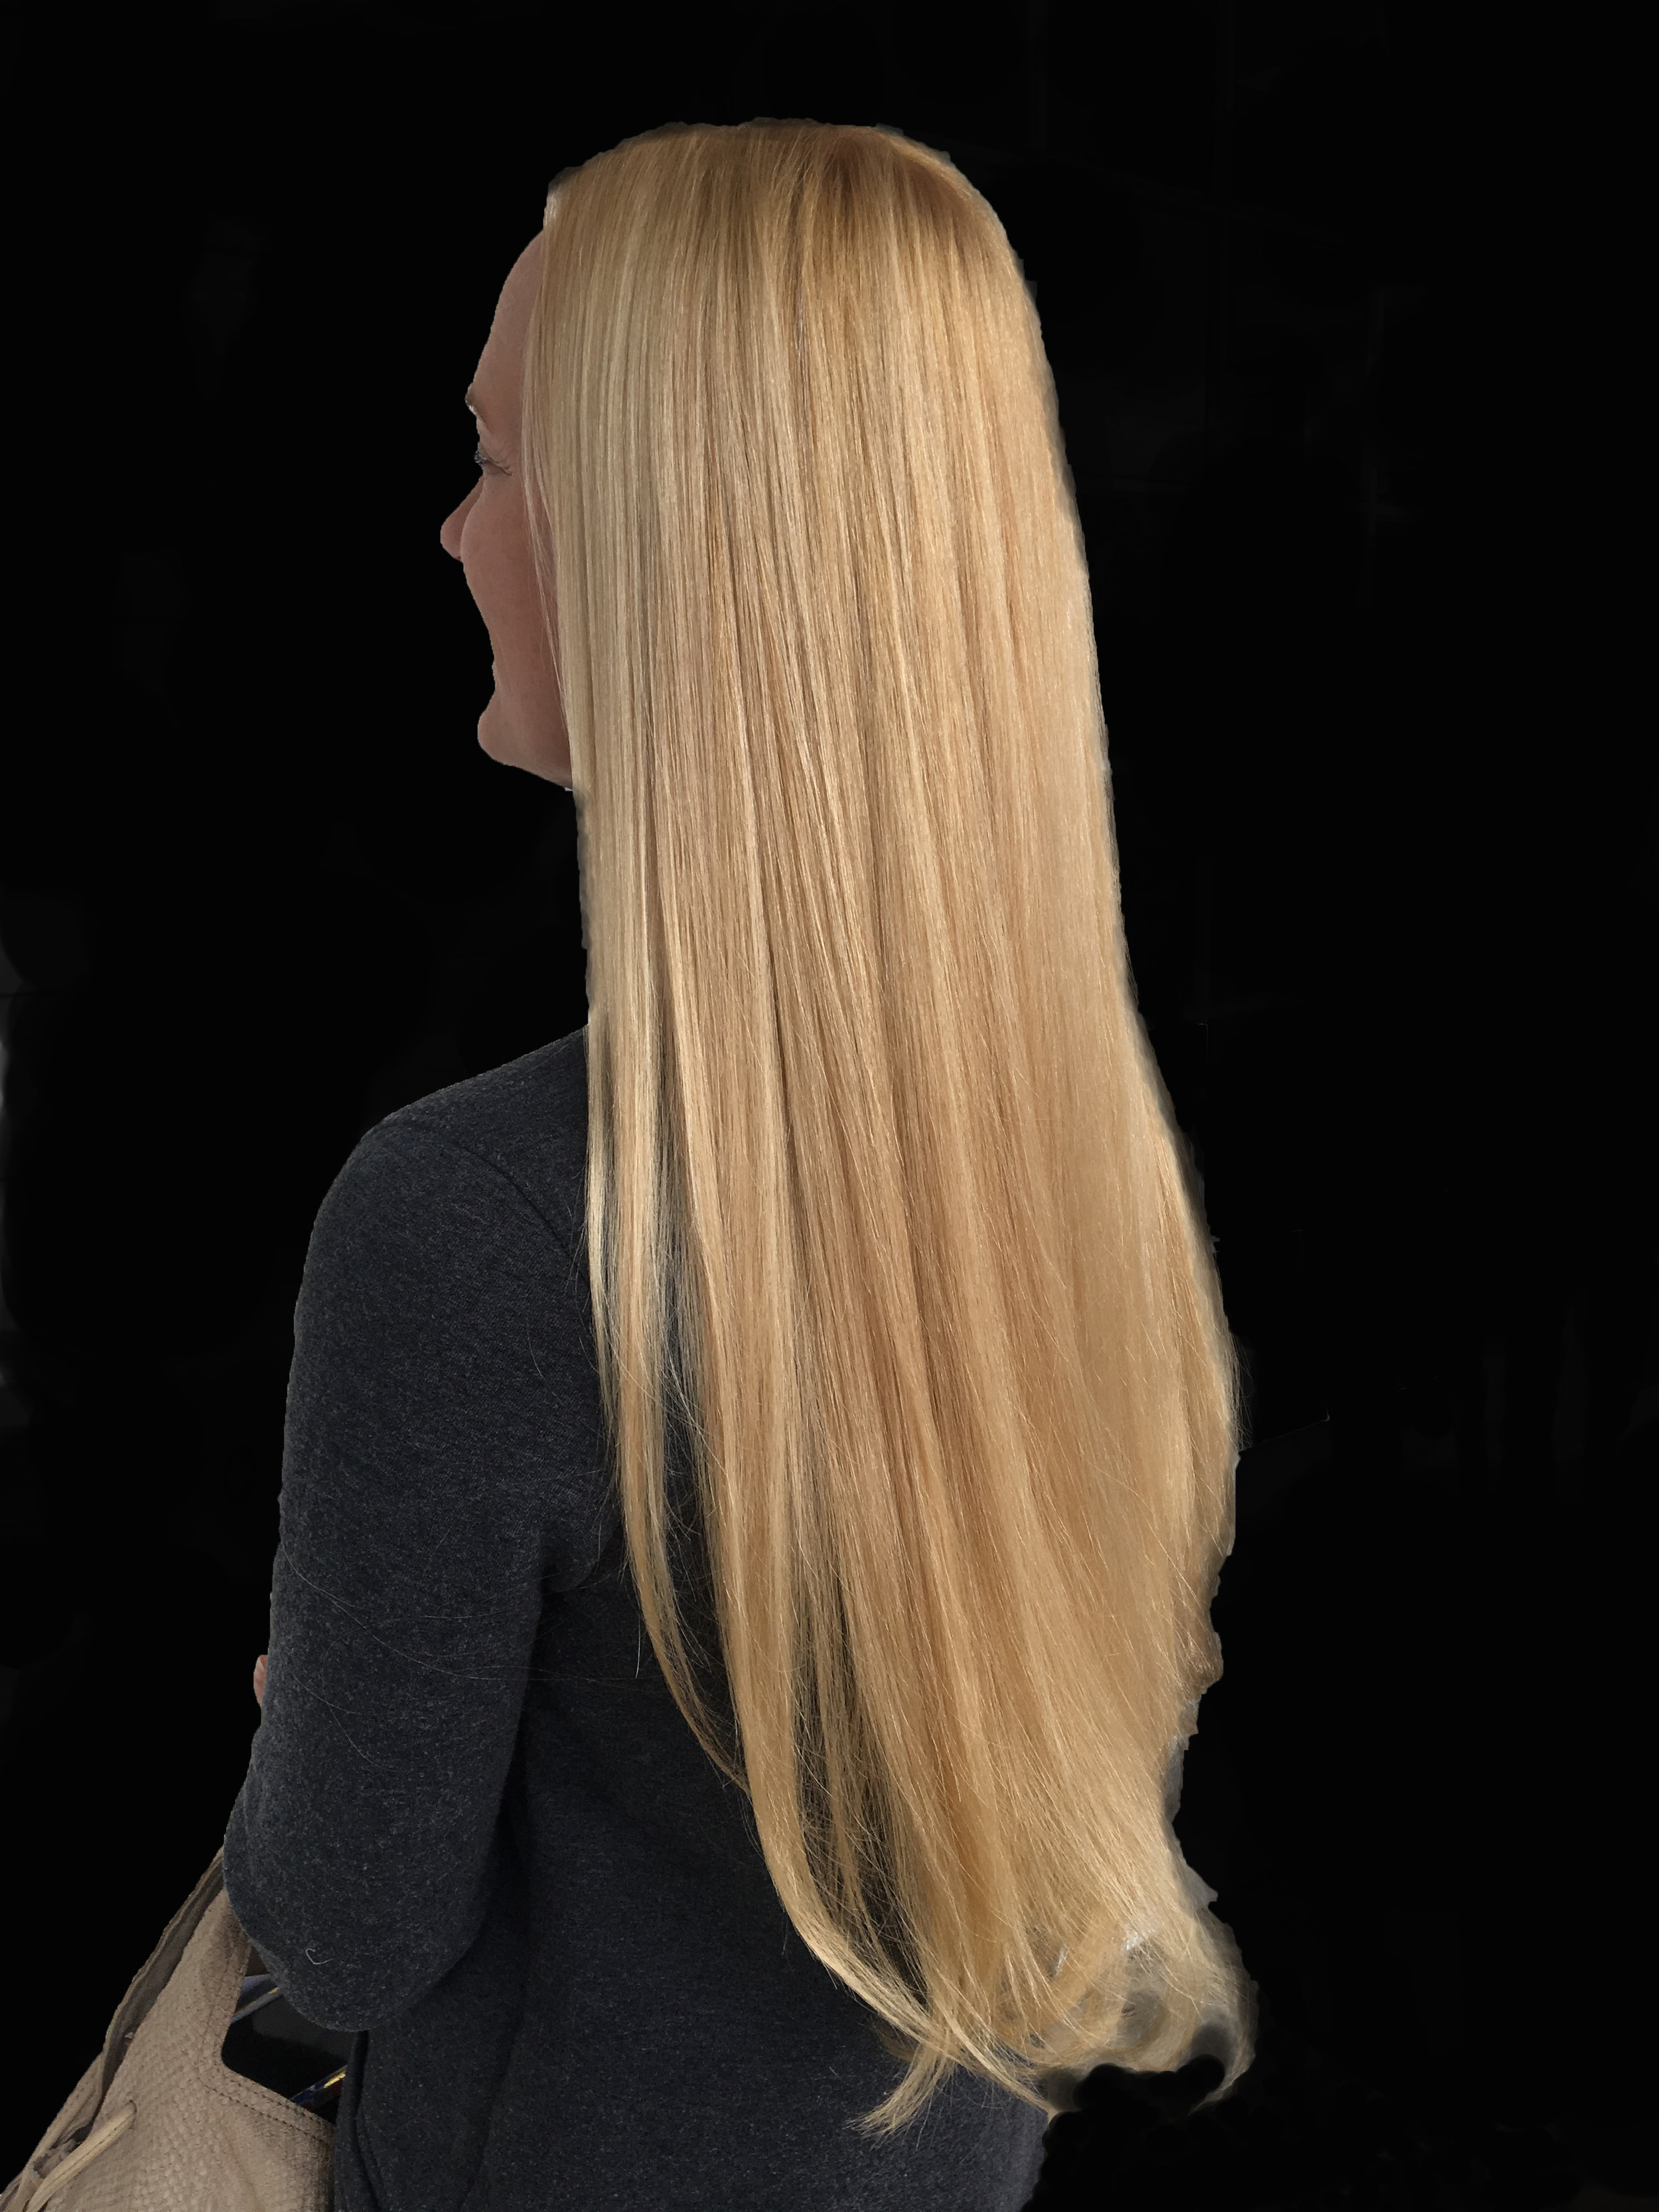 Gallery-Medium/Long Hair — Hair is art